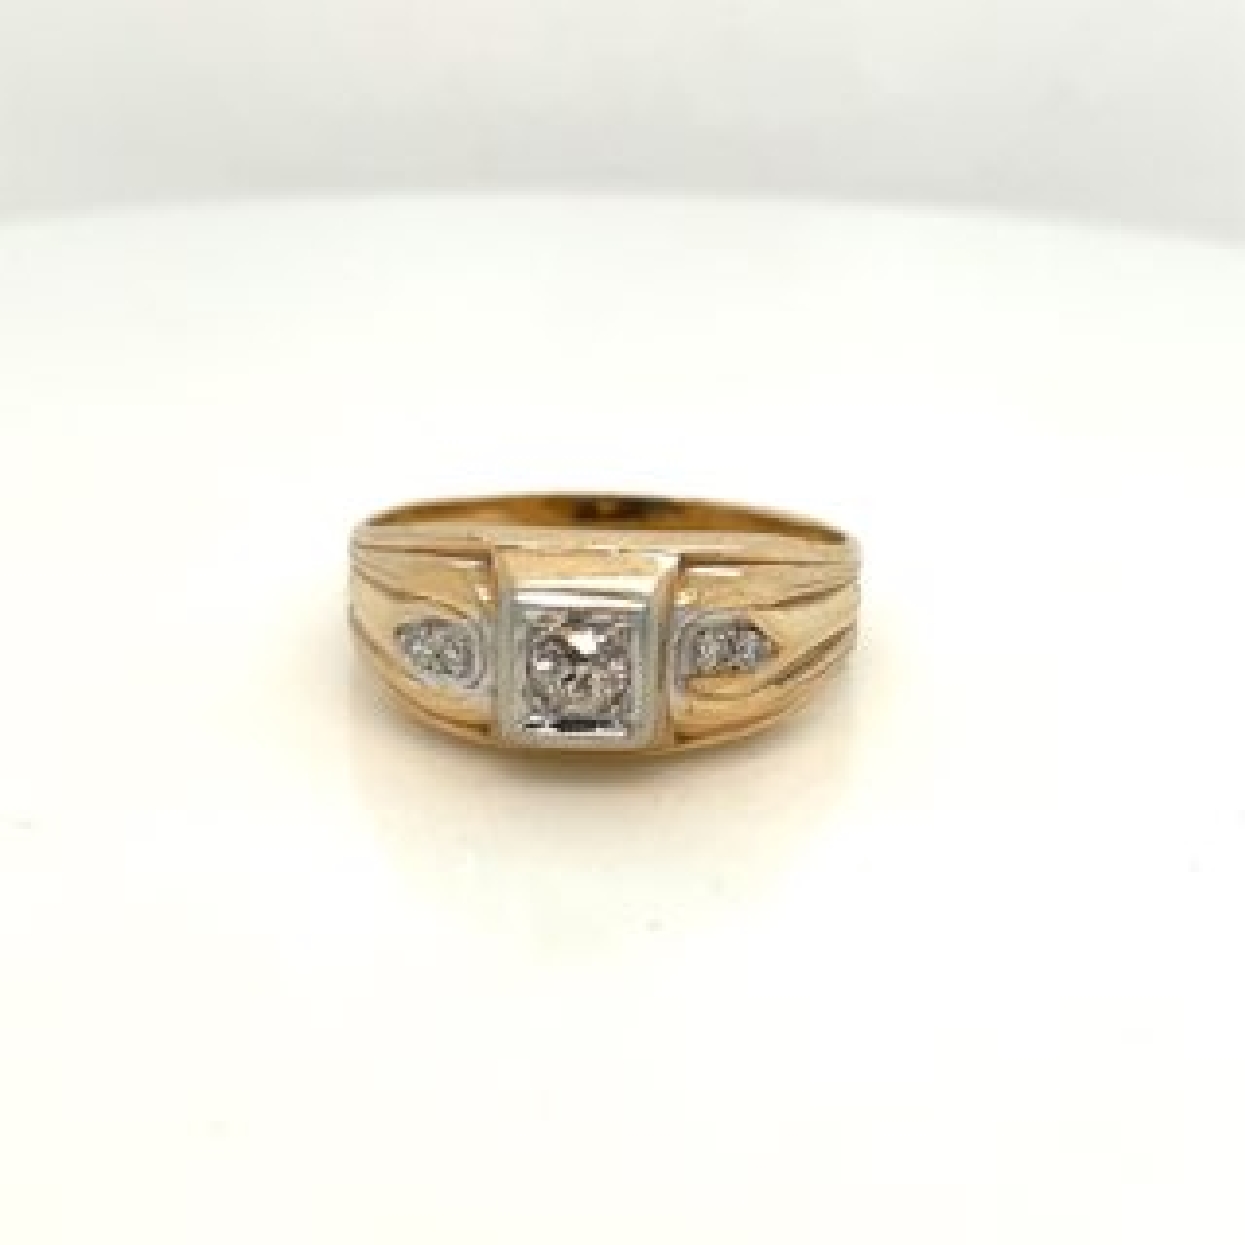 14K Yellow Gold Signey Style Diamond Ring
Size: 8.25